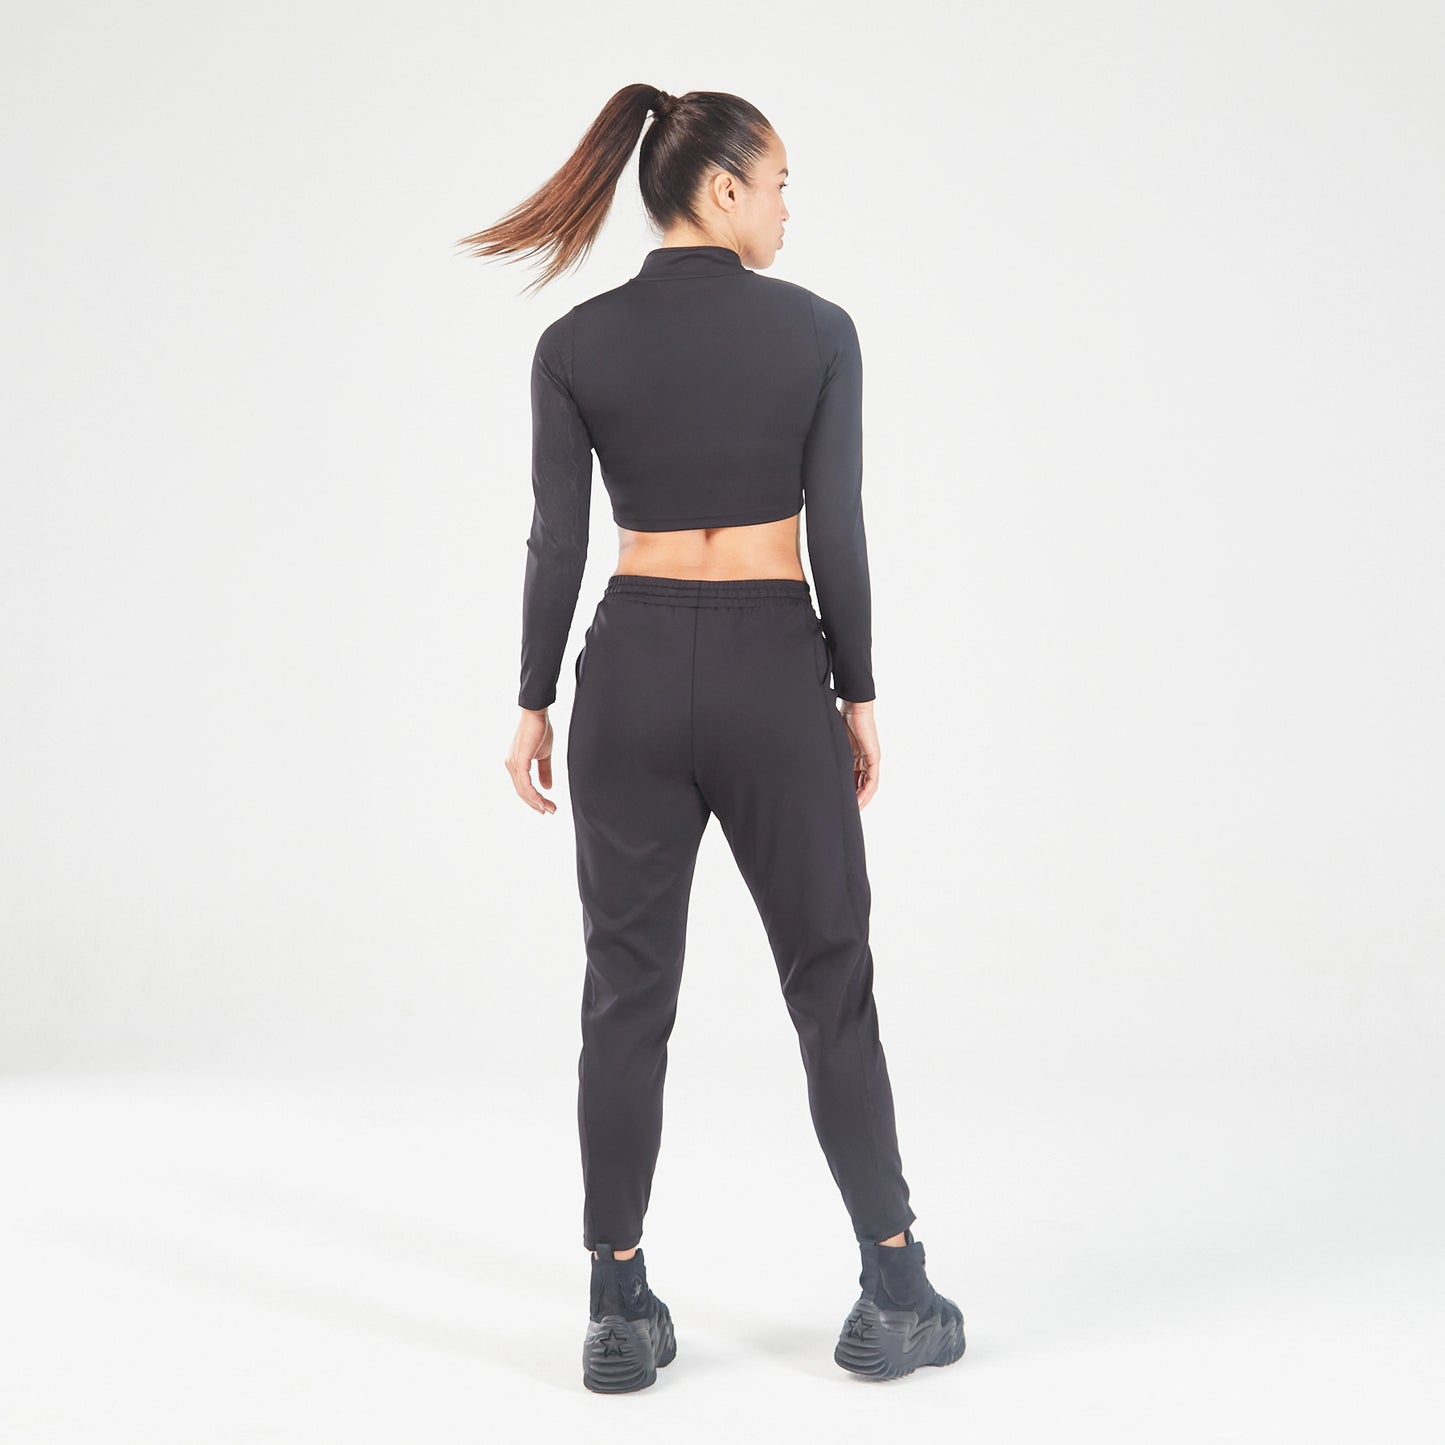 squatwolf-workout-clothes-qtr-zip-serpent-top-black-gym-t-shirts-for-women